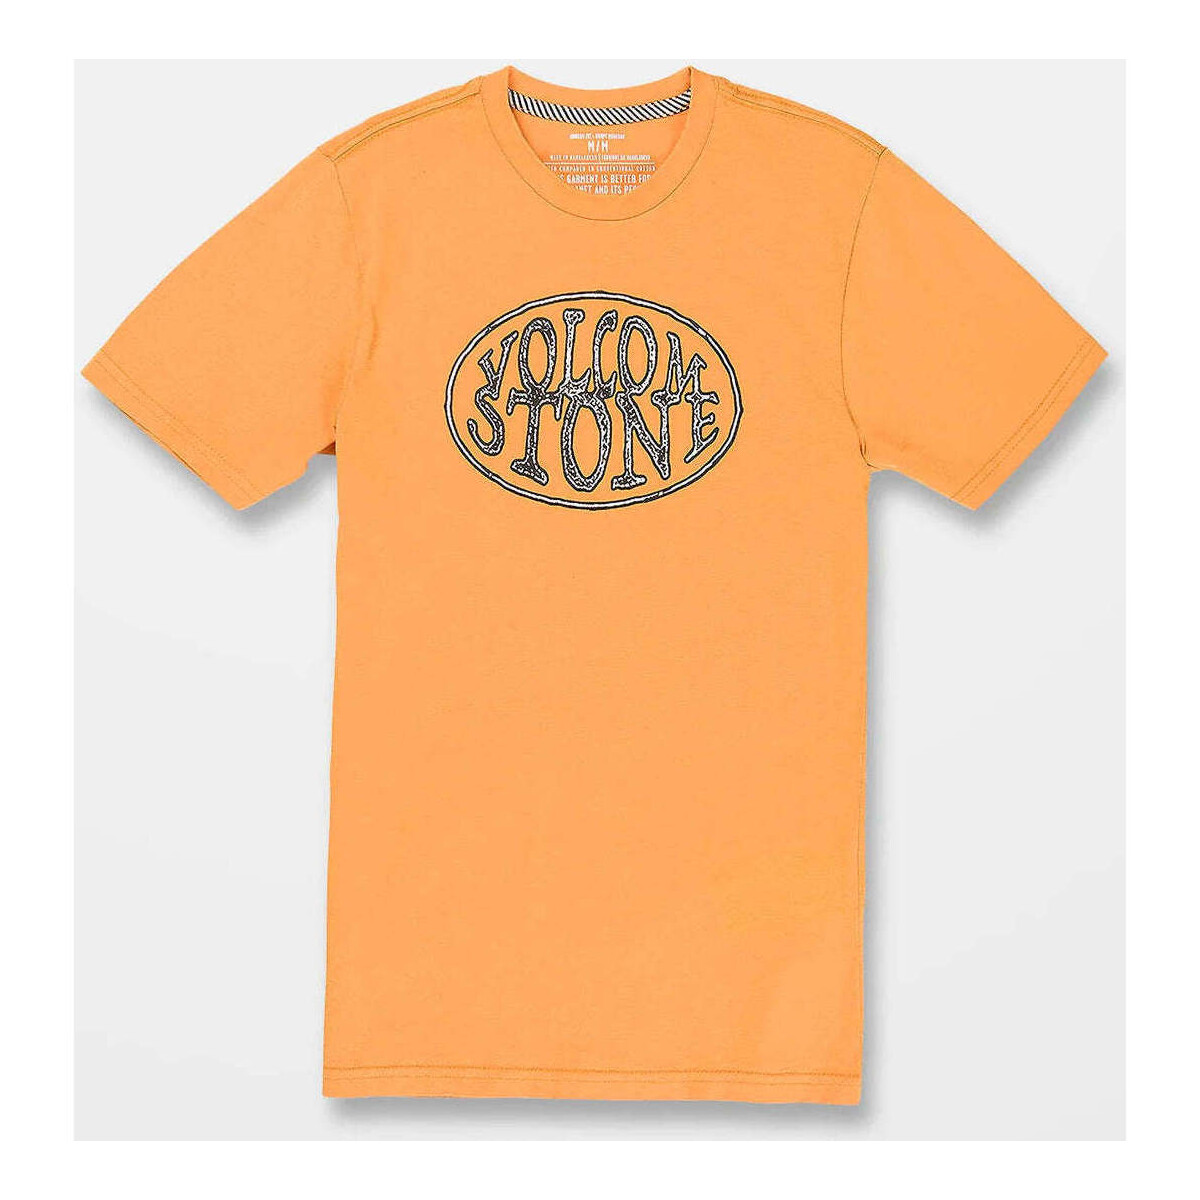 Vêtements Enfant T-shirts manches courtes Volcom Camiseta niño  Lifer SS Sunburst Orange